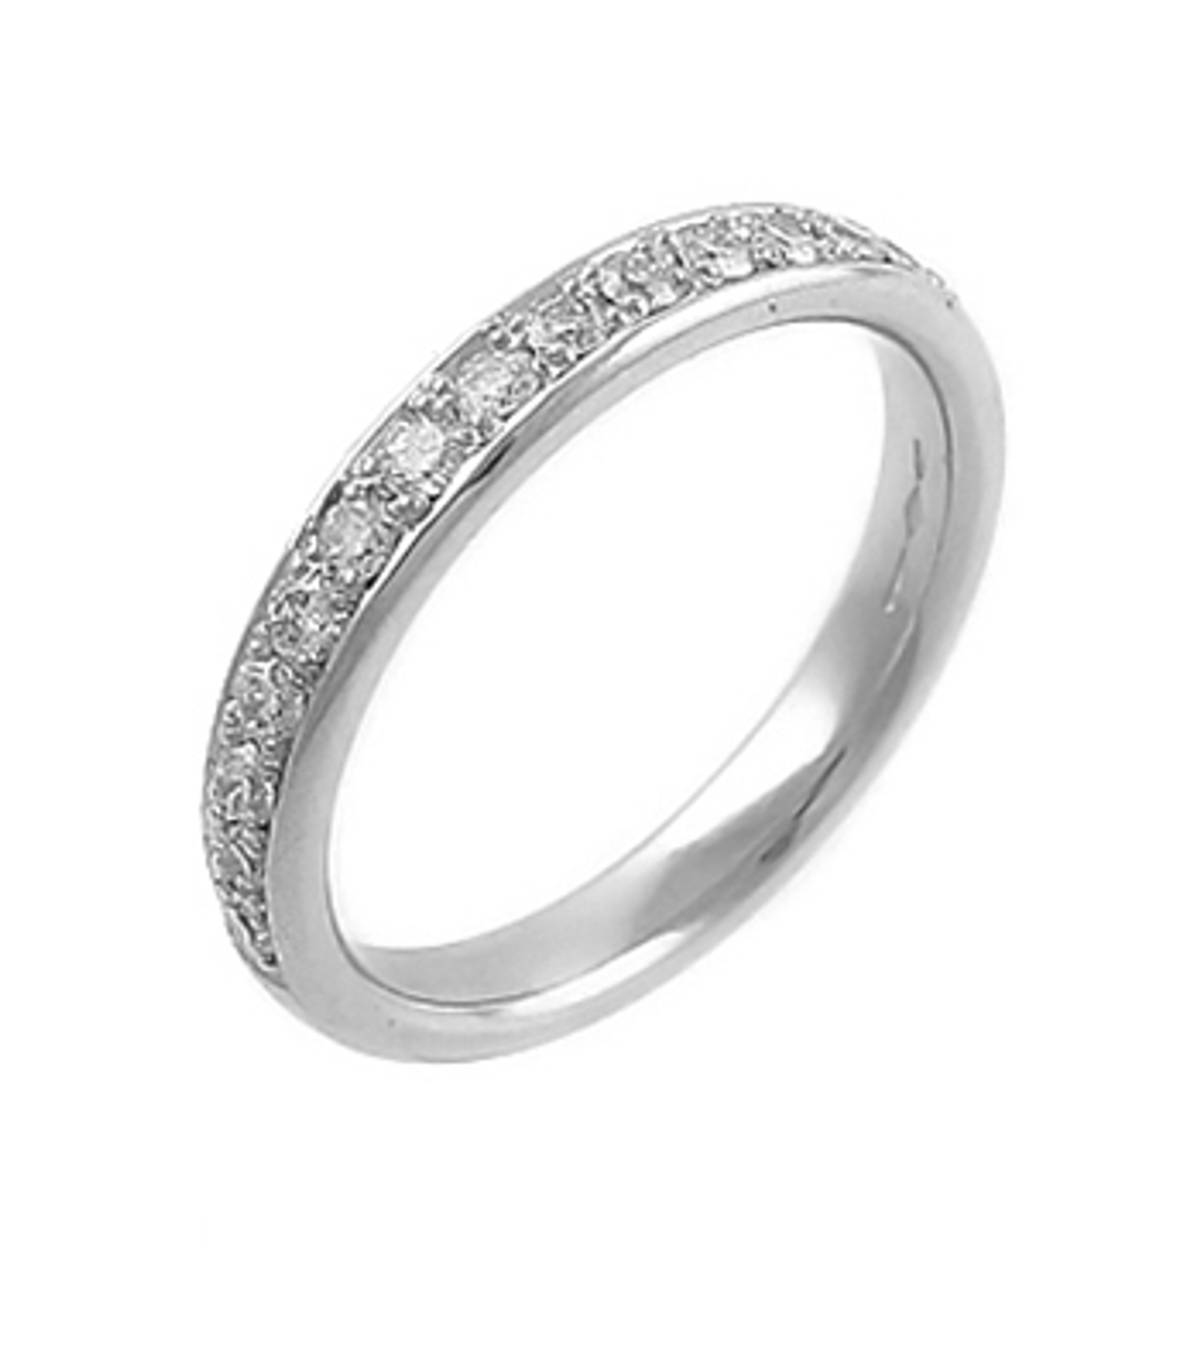 18k white gold brilliant cut diamond milgrain set wedding ring
Carat: total diamond weight 0.45cts
Metal: 18k white gold